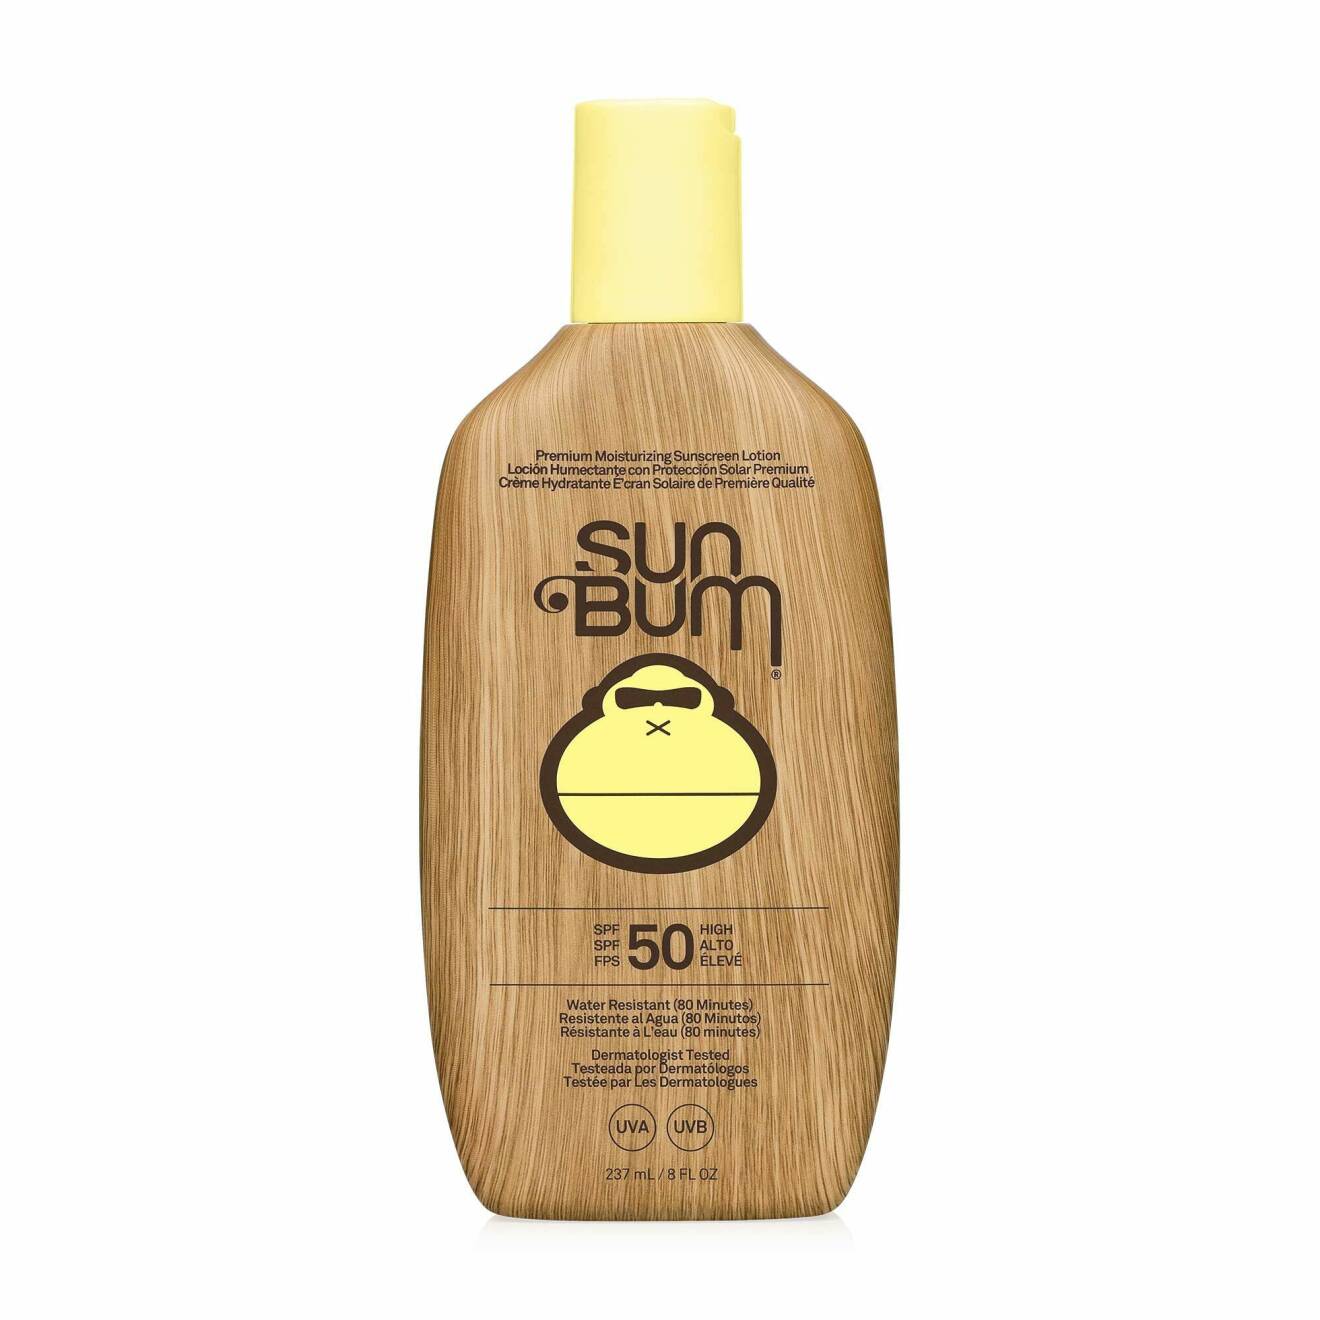 Premium Moisturizing Sunscreen Lotion SPF 30 från Sun Bum.